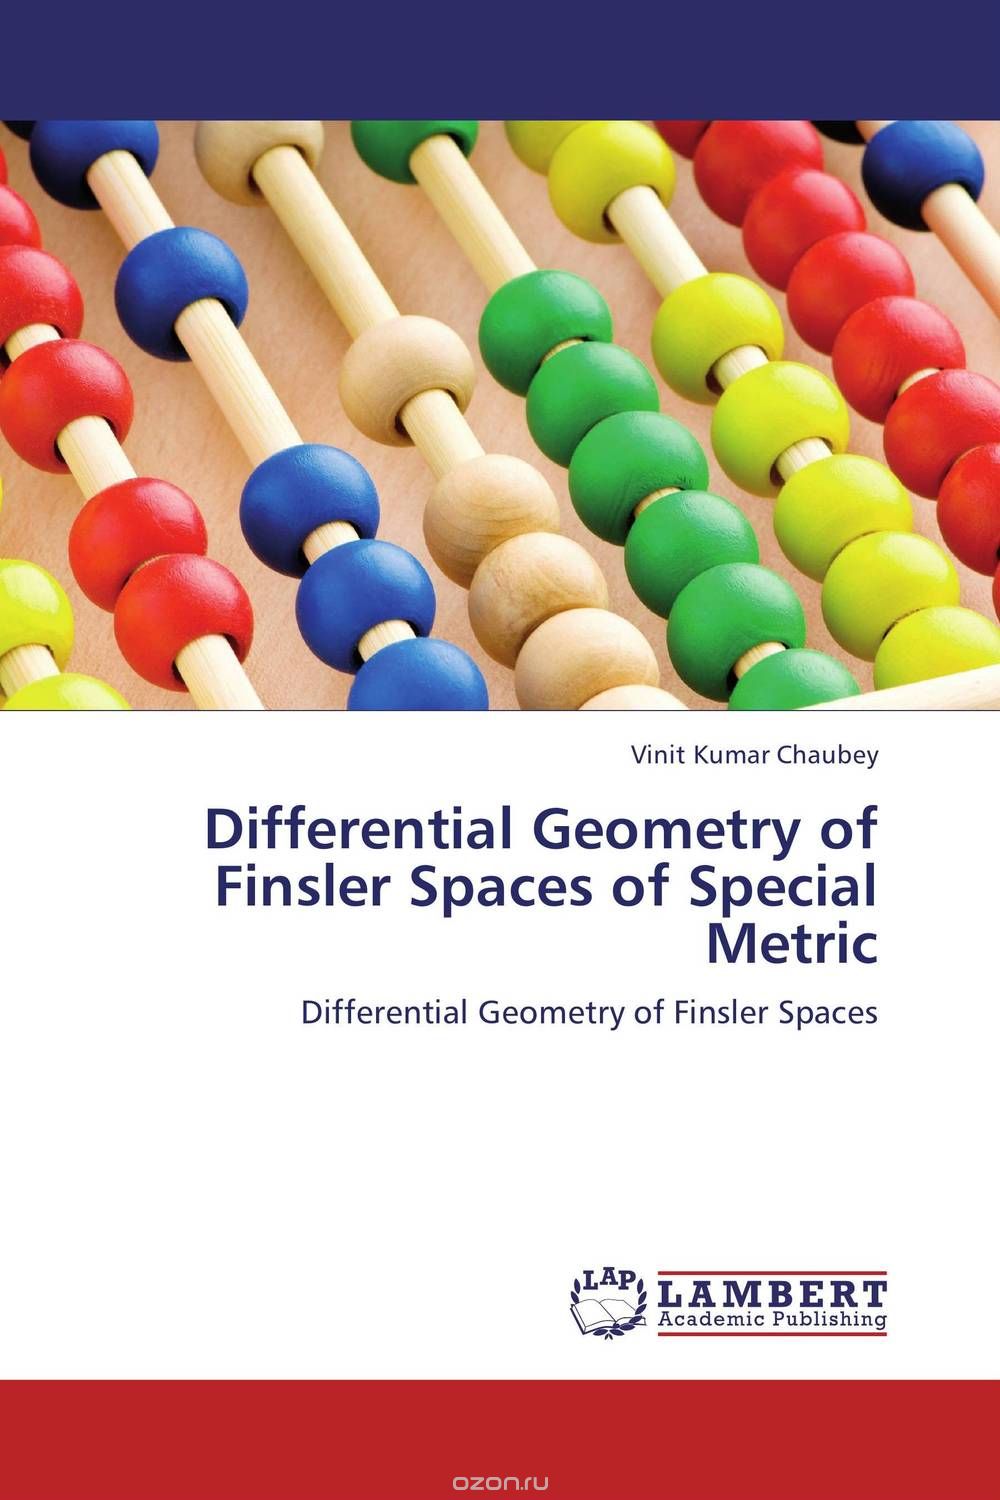 Скачать книгу "Differential Geometry of Finsler Spaces of Special Metric"